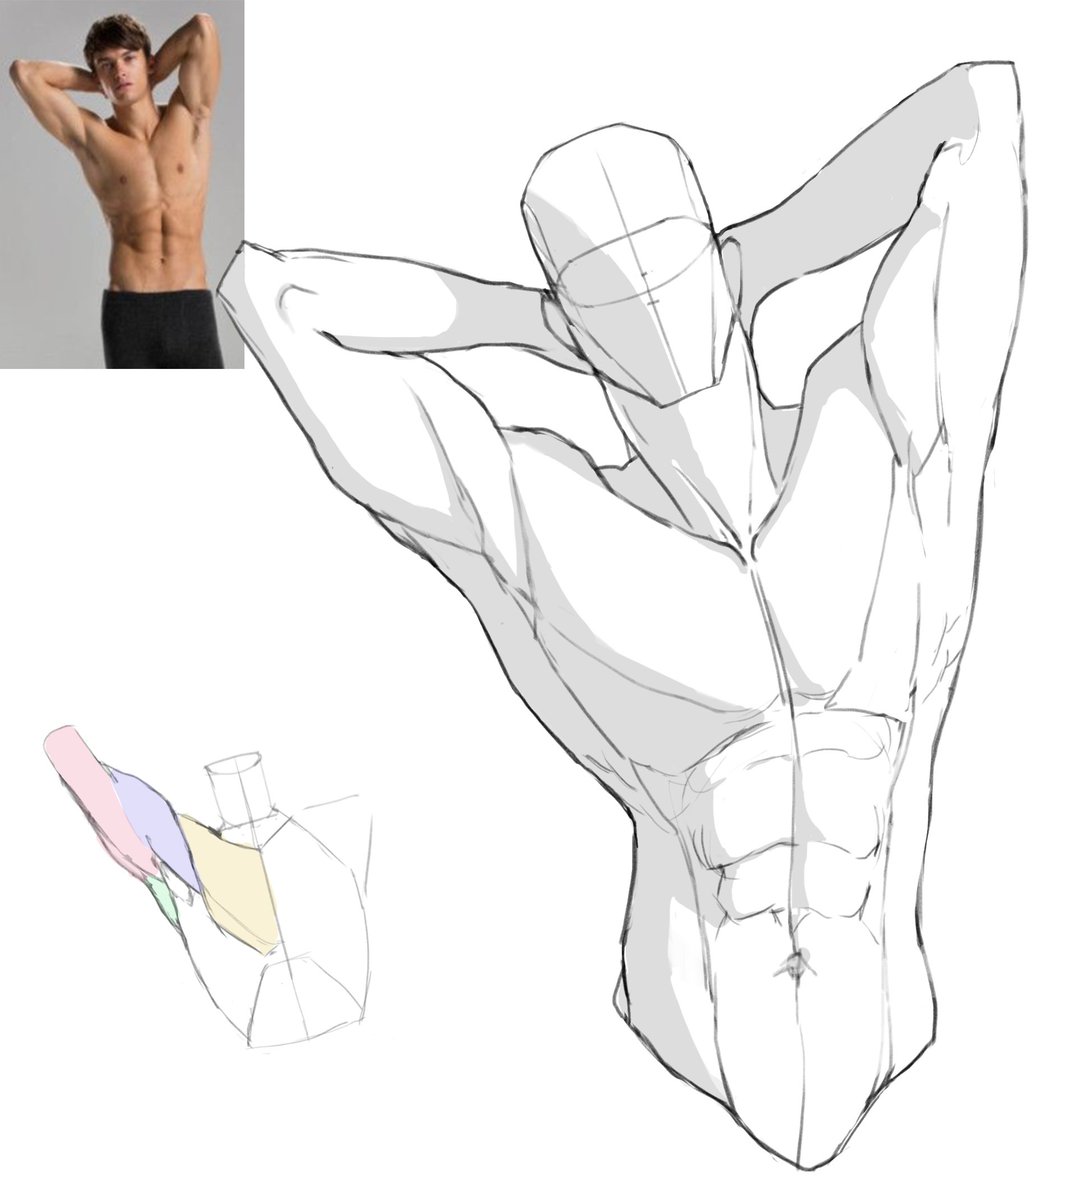 #shading #drawing #sketches #figuredrawing #humananatomy #muscles #doodle #art